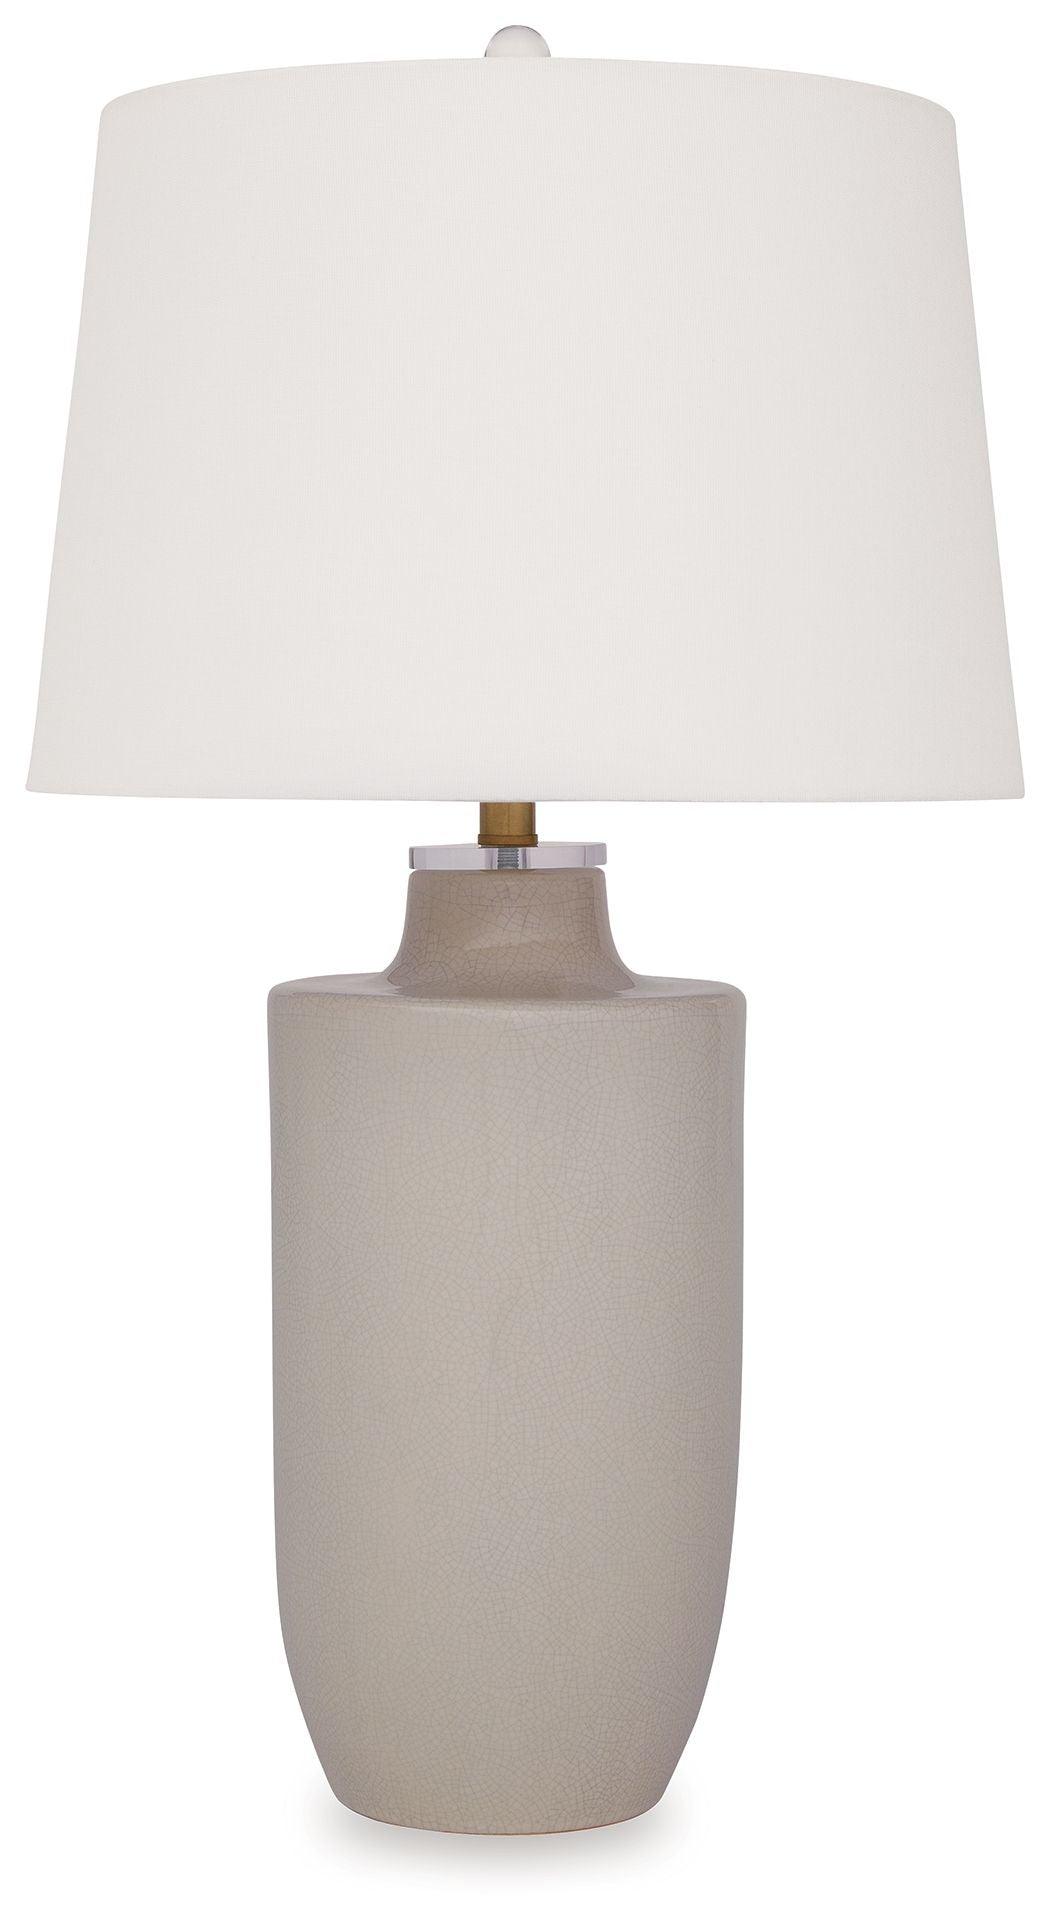 Ashley Furniture - Cylener - Off White - Ceramic Table Lamp - 5th Avenue Furniture